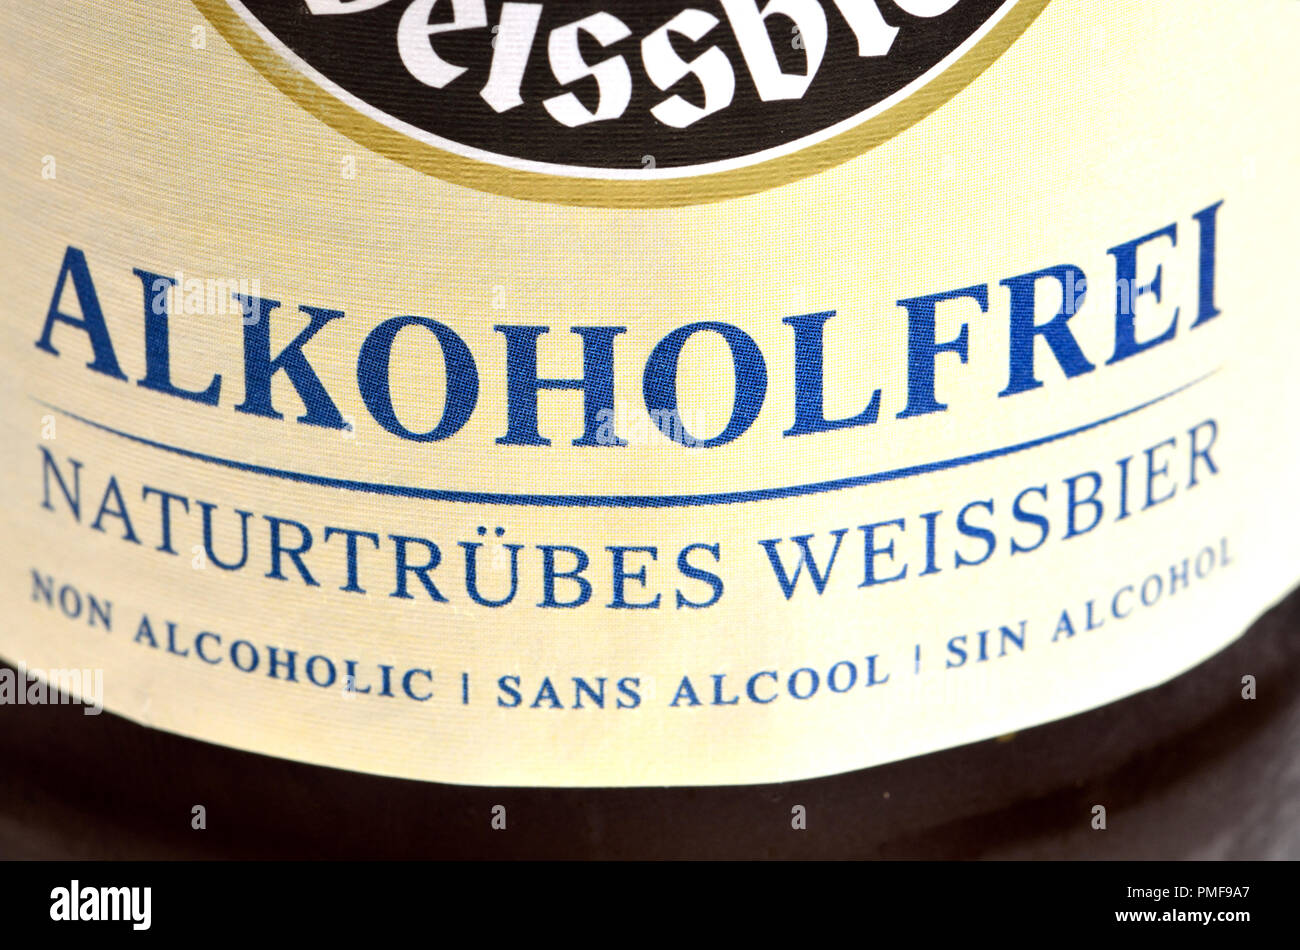 Alcohol-free beer German Weissbier - multi-lingual label Stock Photo